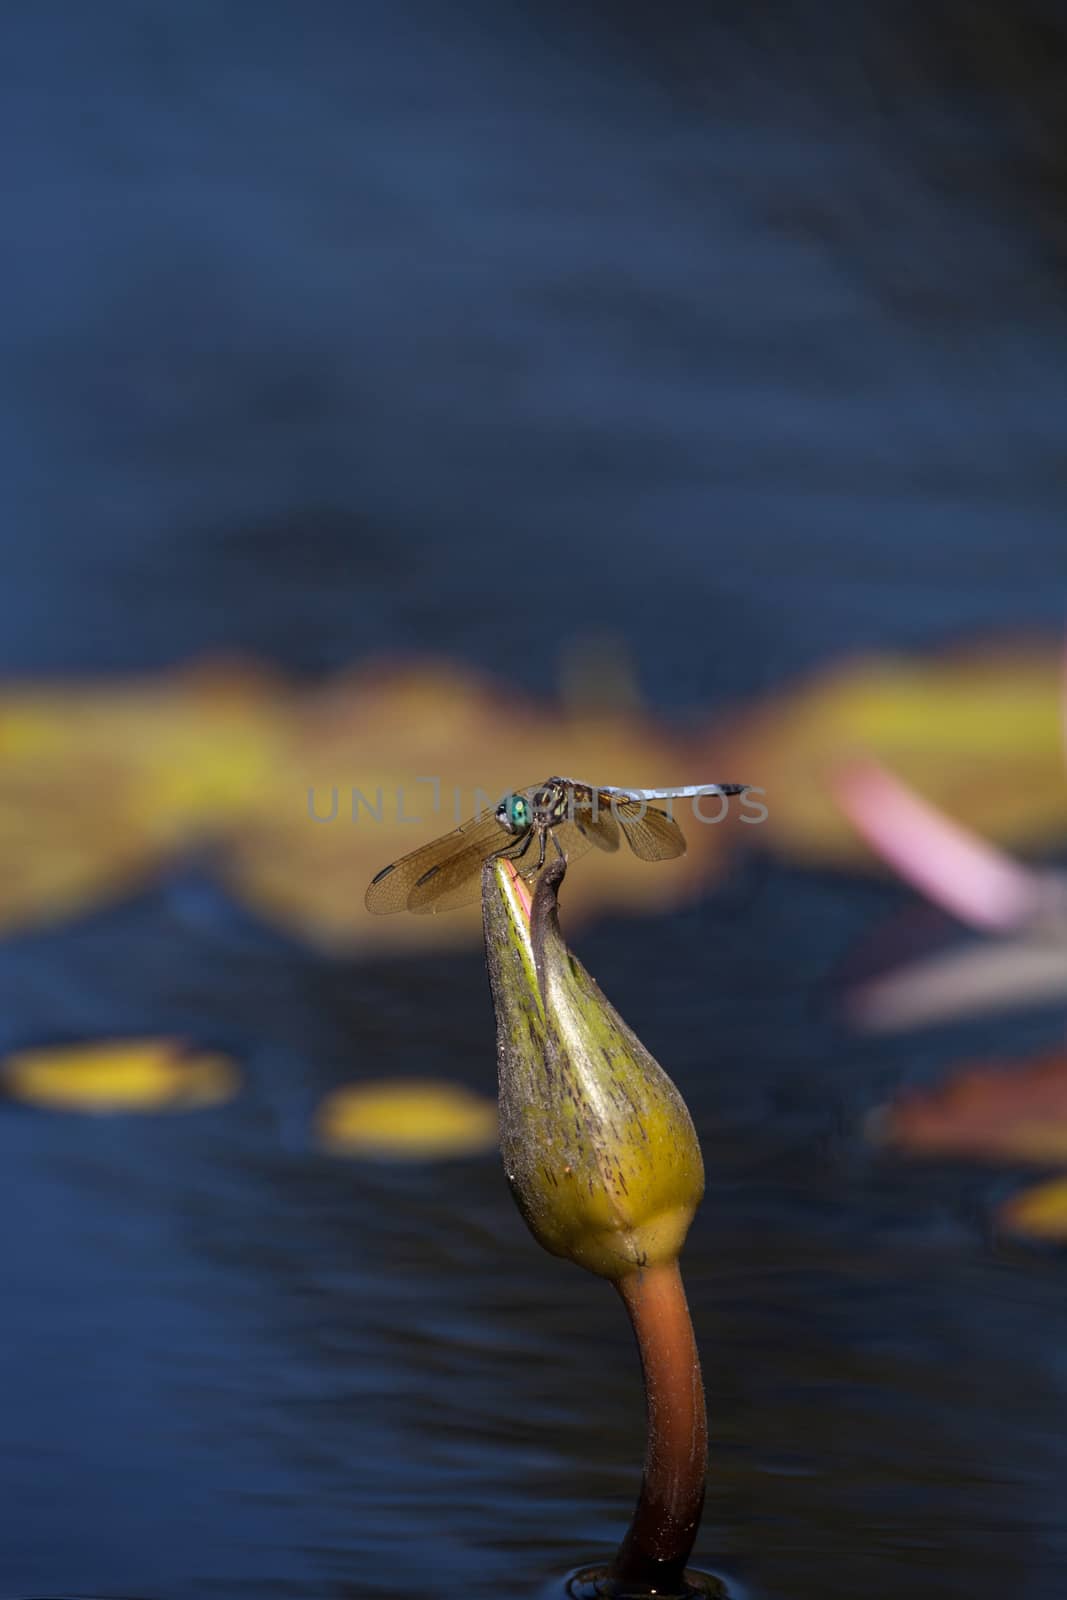 Blue dasher male dragonfly Pachydiplax longipennis by steffstarr